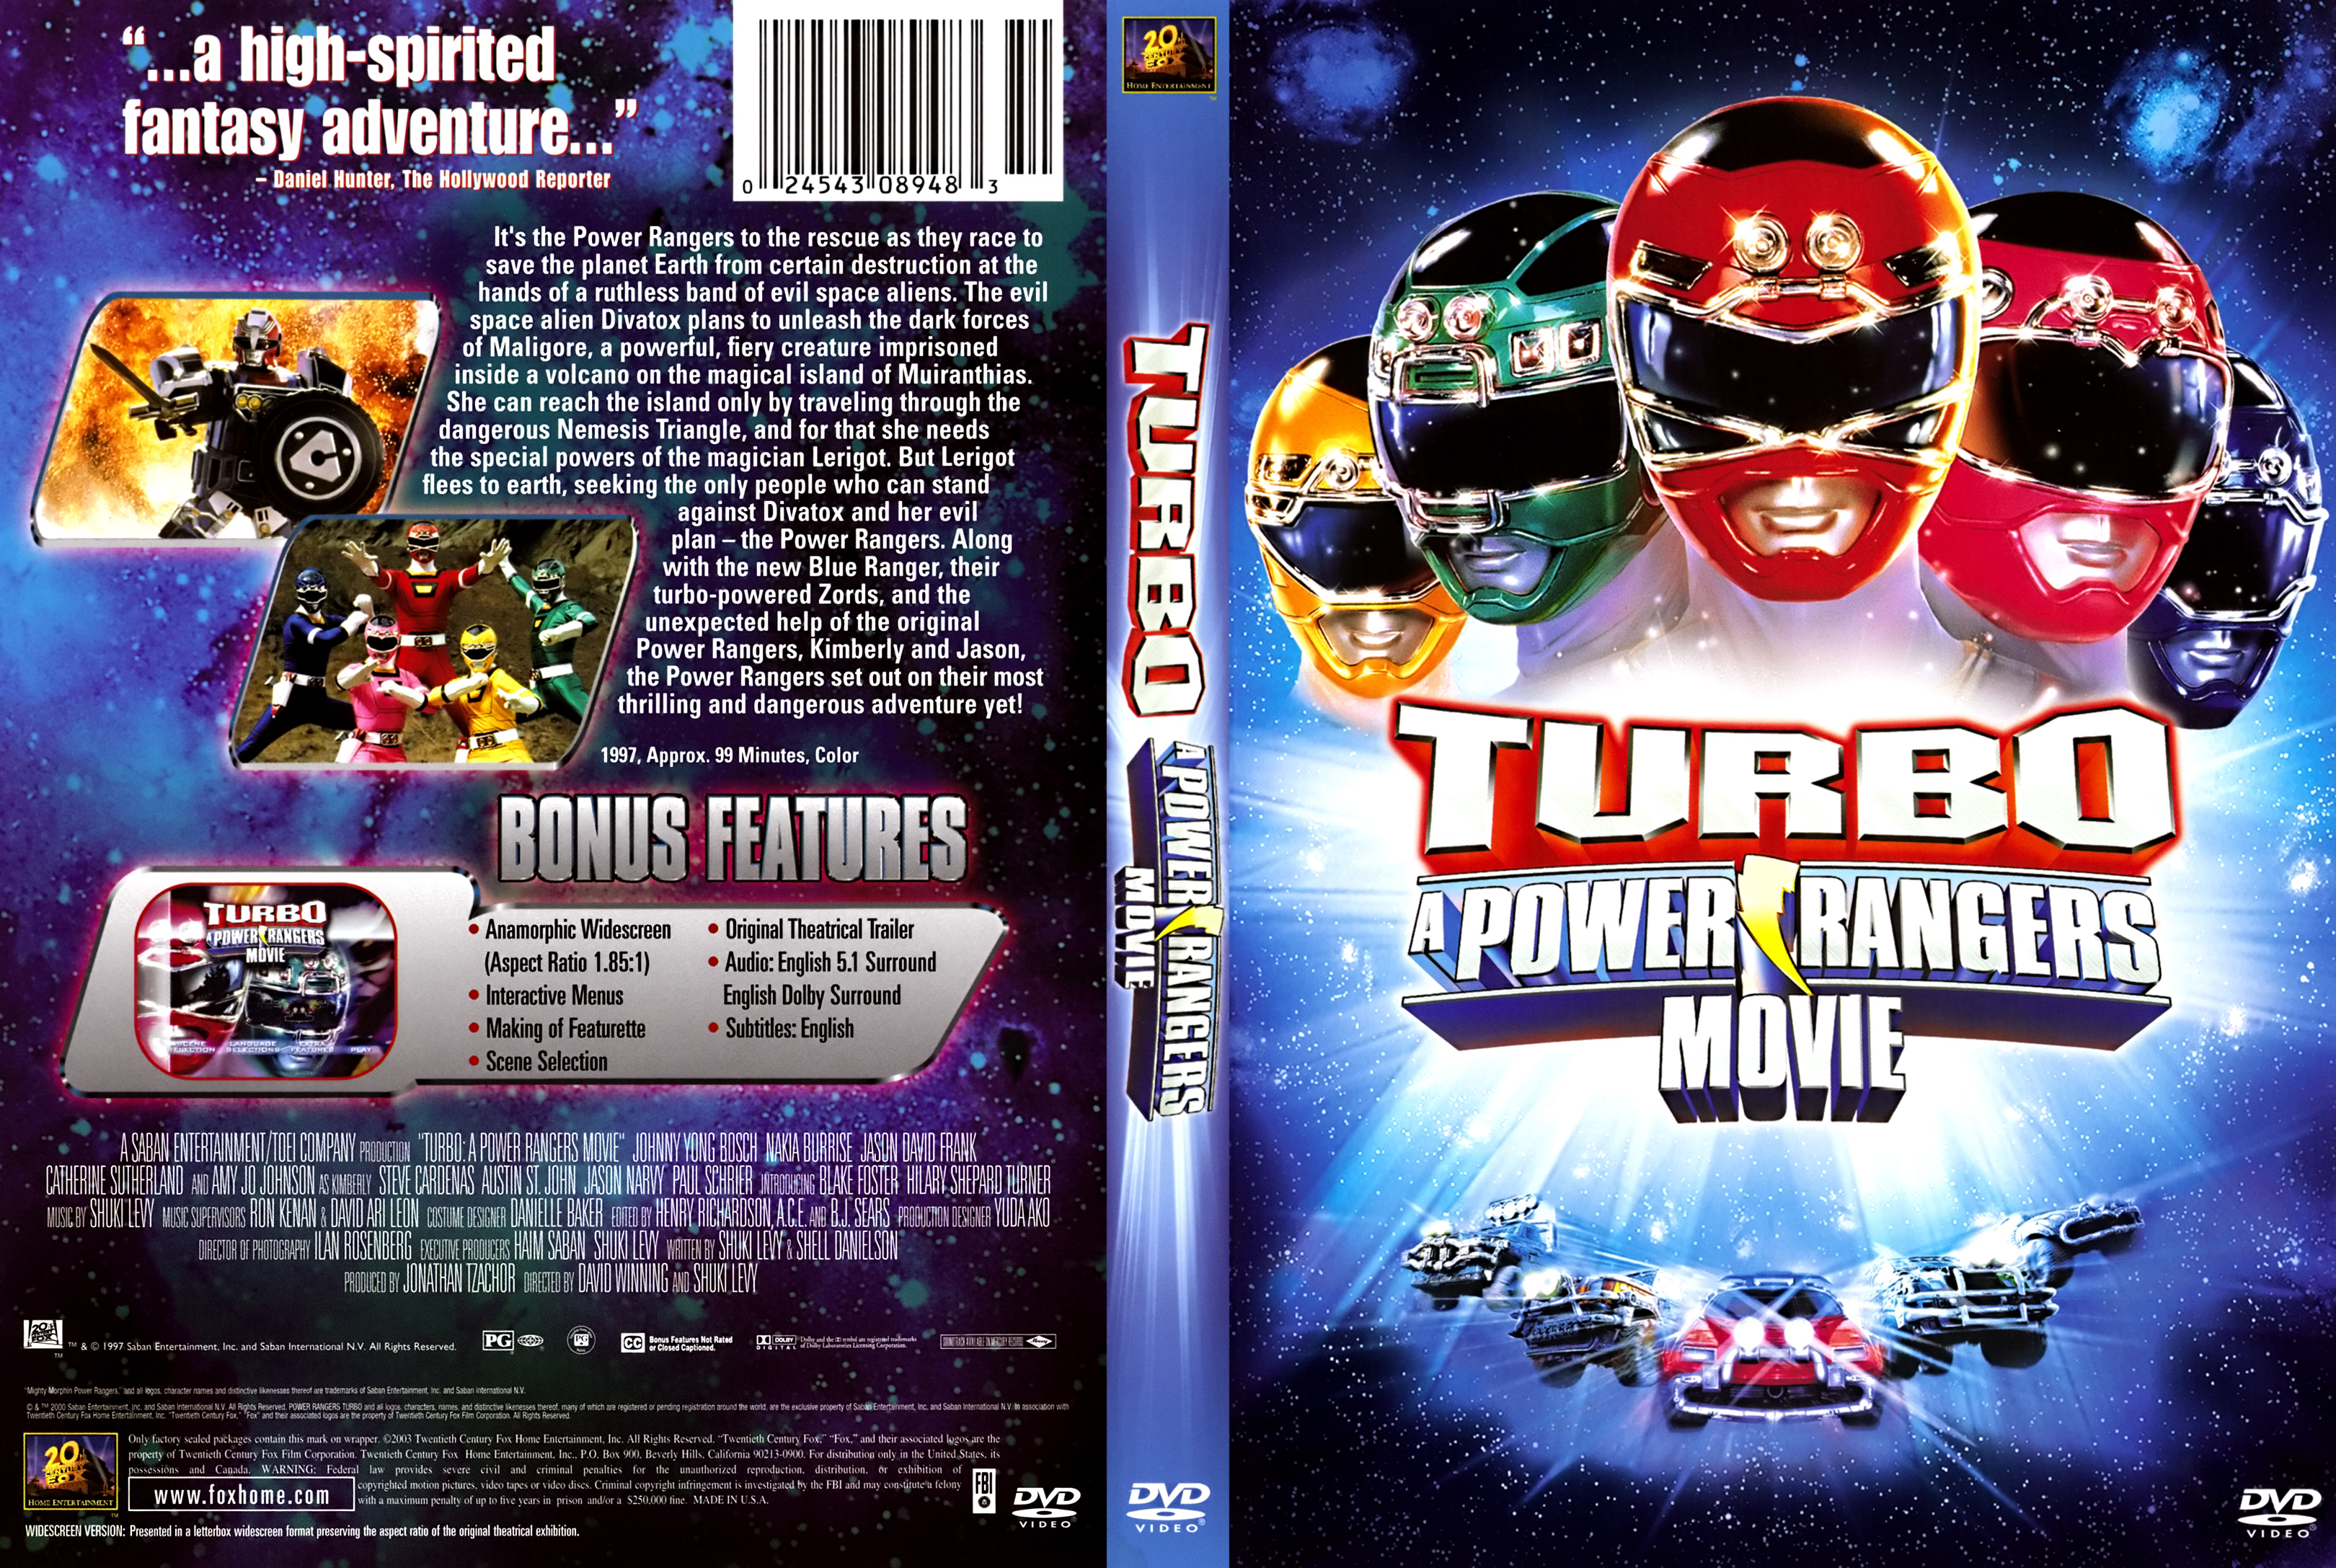 Turbo : A Power Rangers Movie